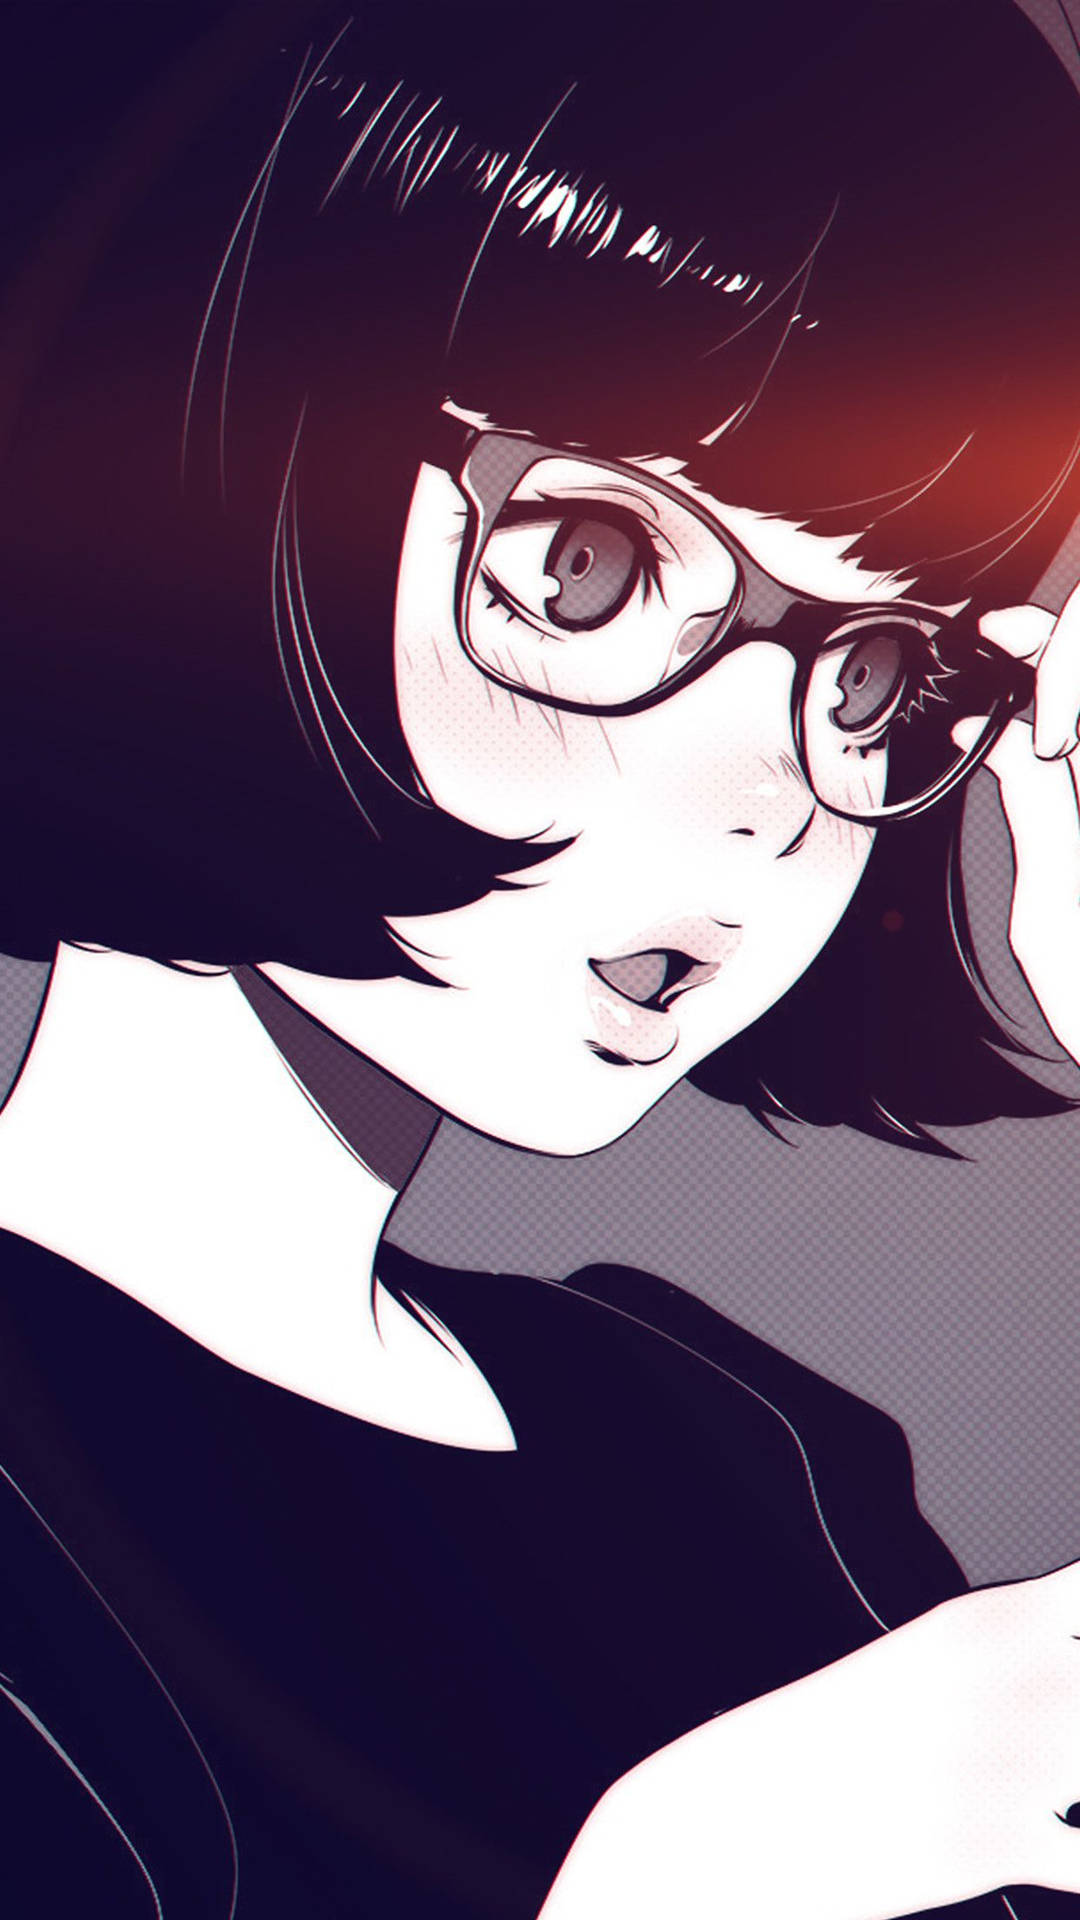 Dark Anime Aesthetic Girl With Glasses